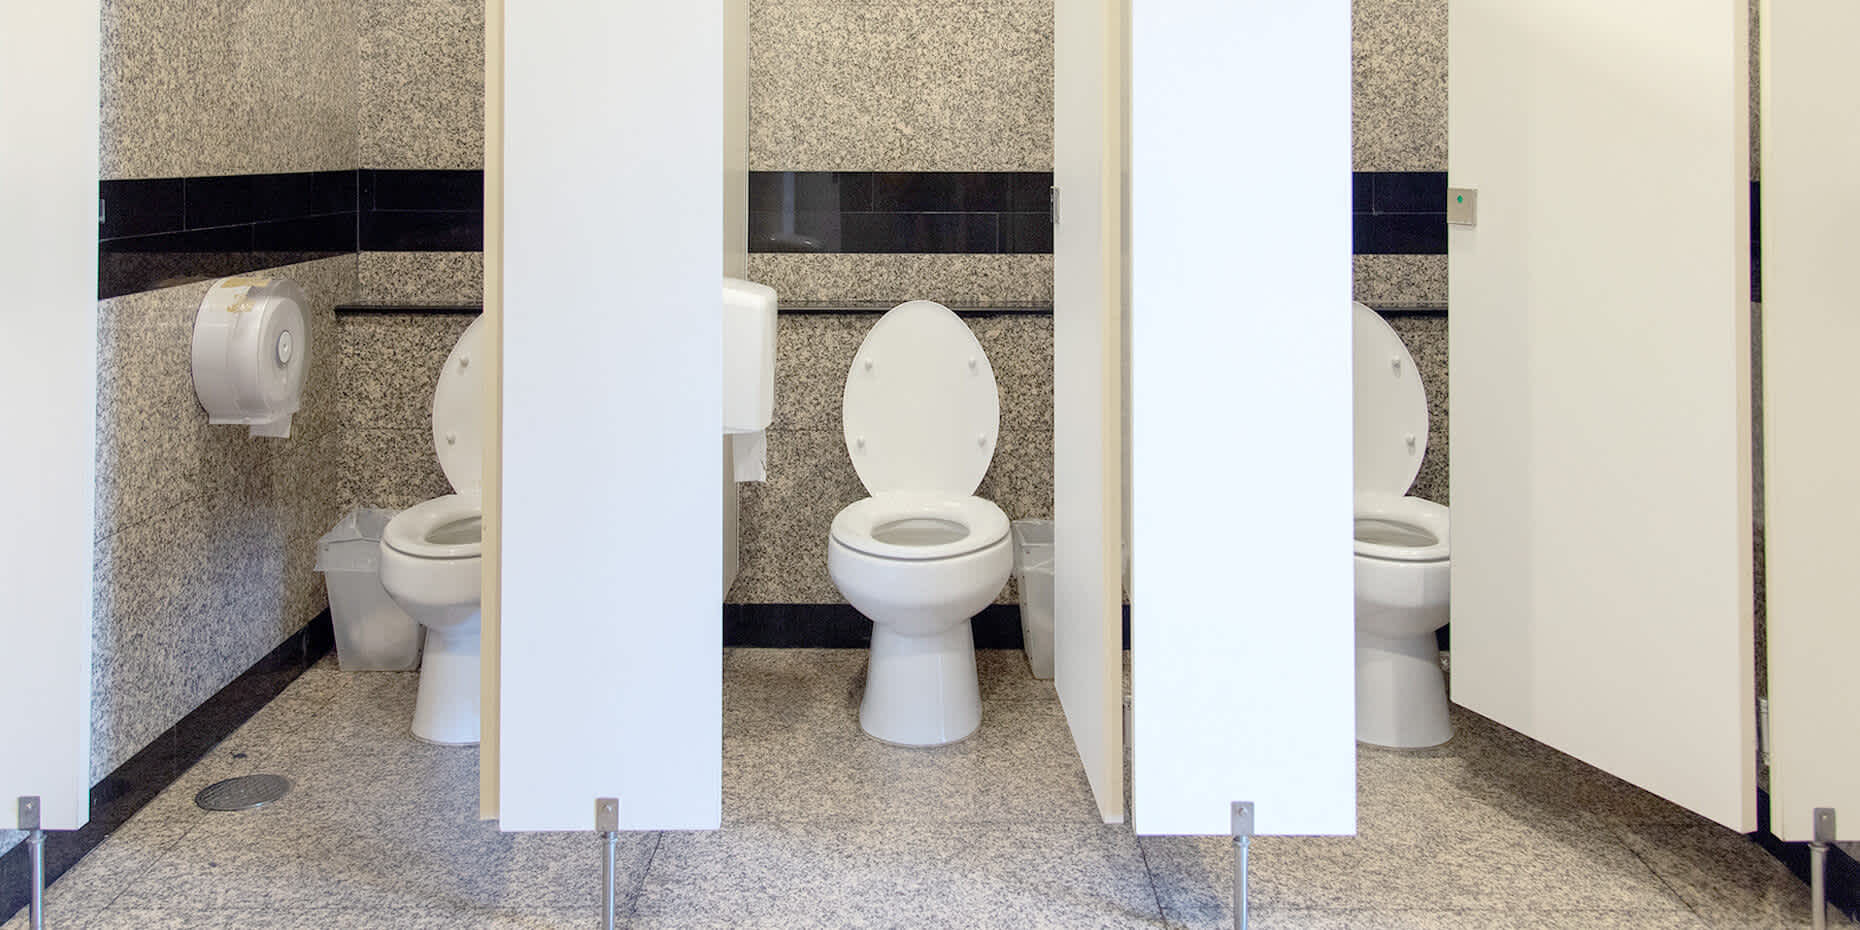 Bathroom stalls with toilet seats